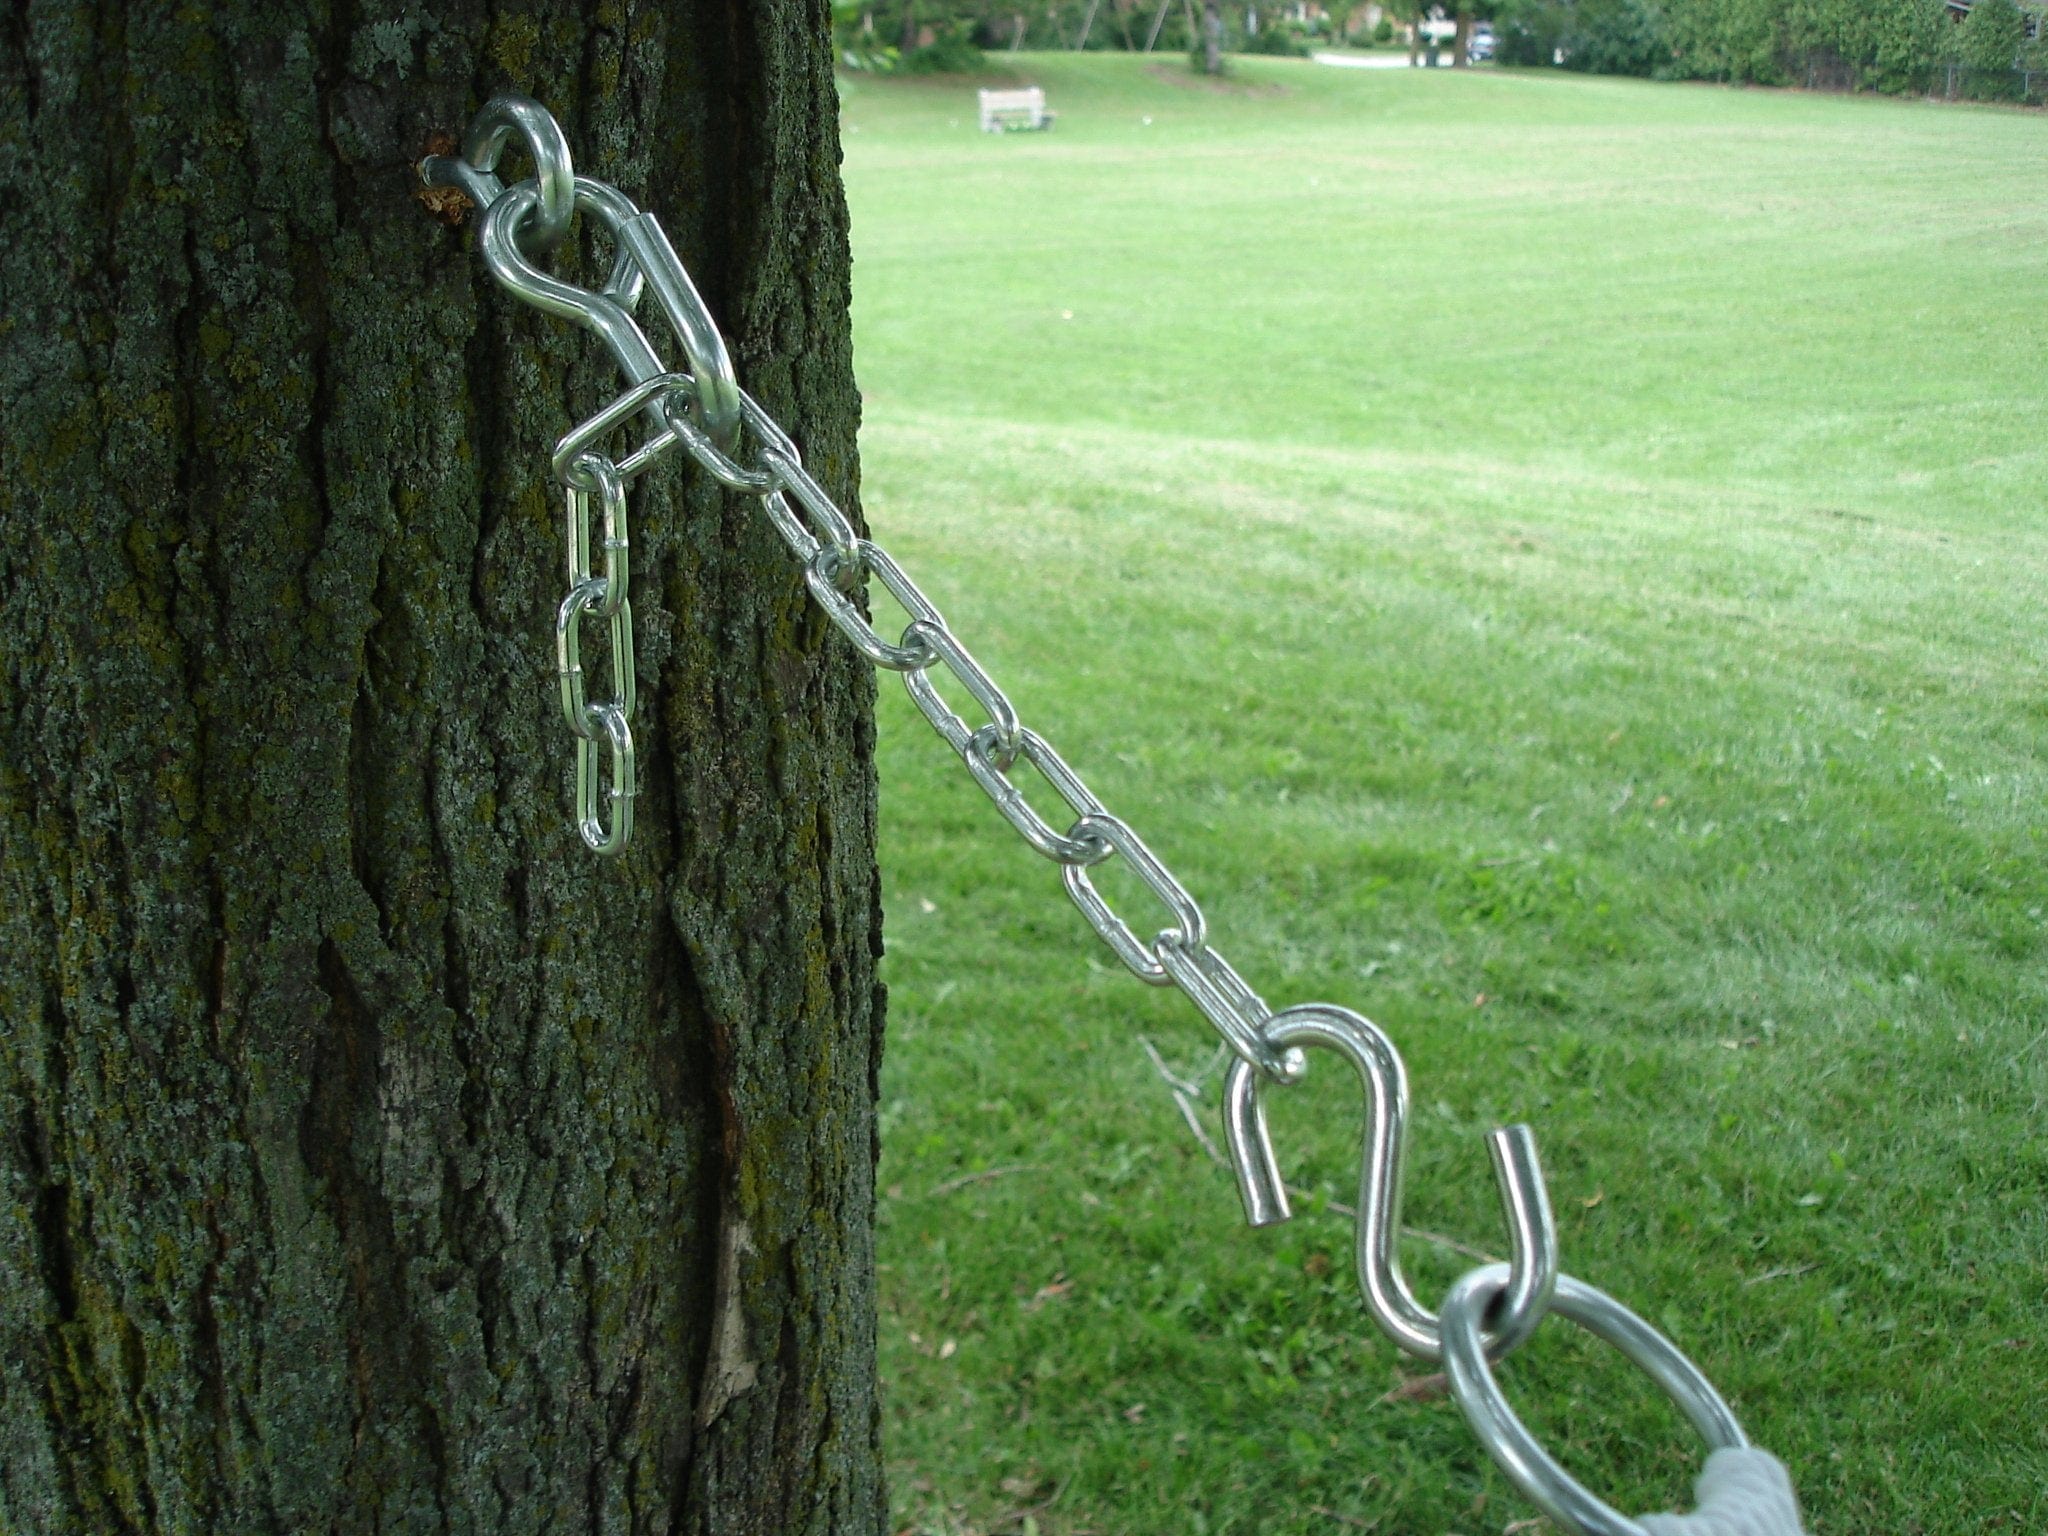 Vivere Chain Hanging Kit